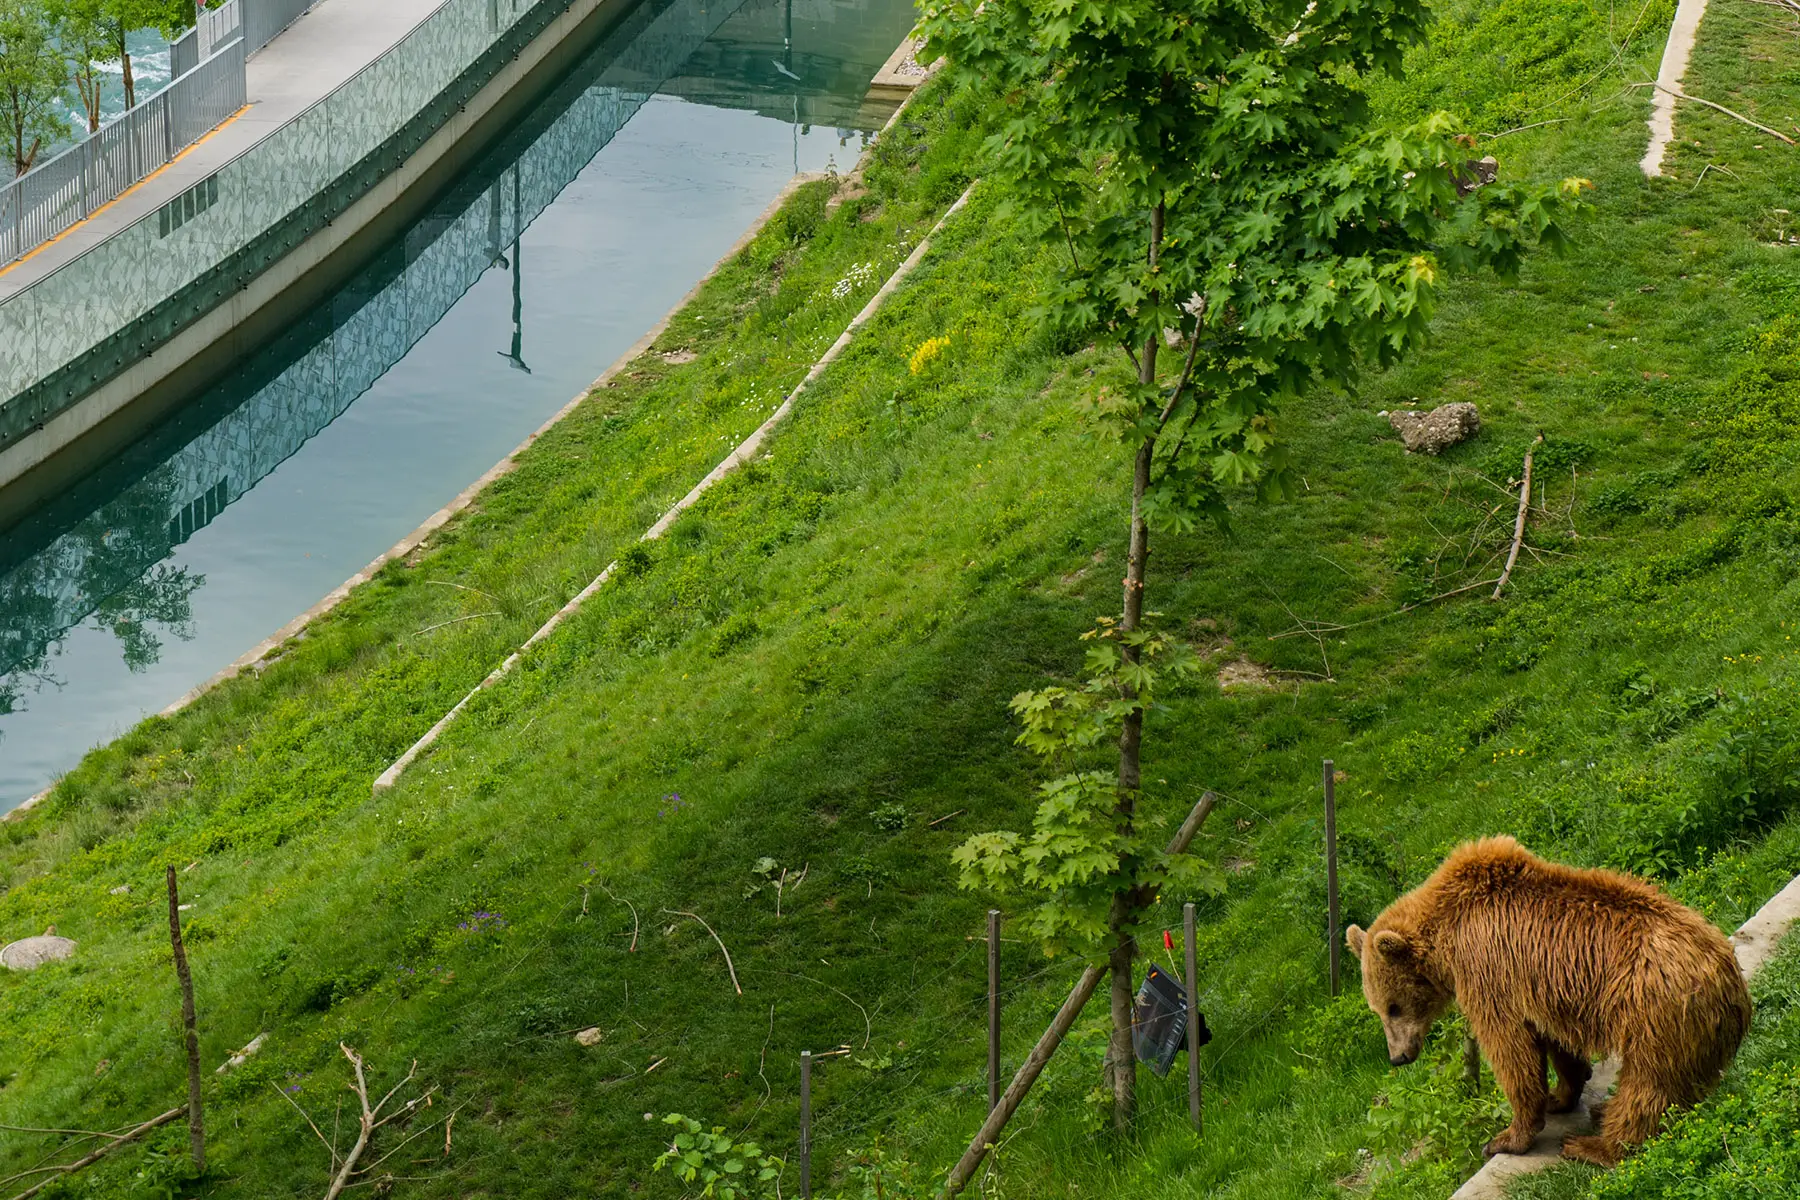 The Bern Bear Park